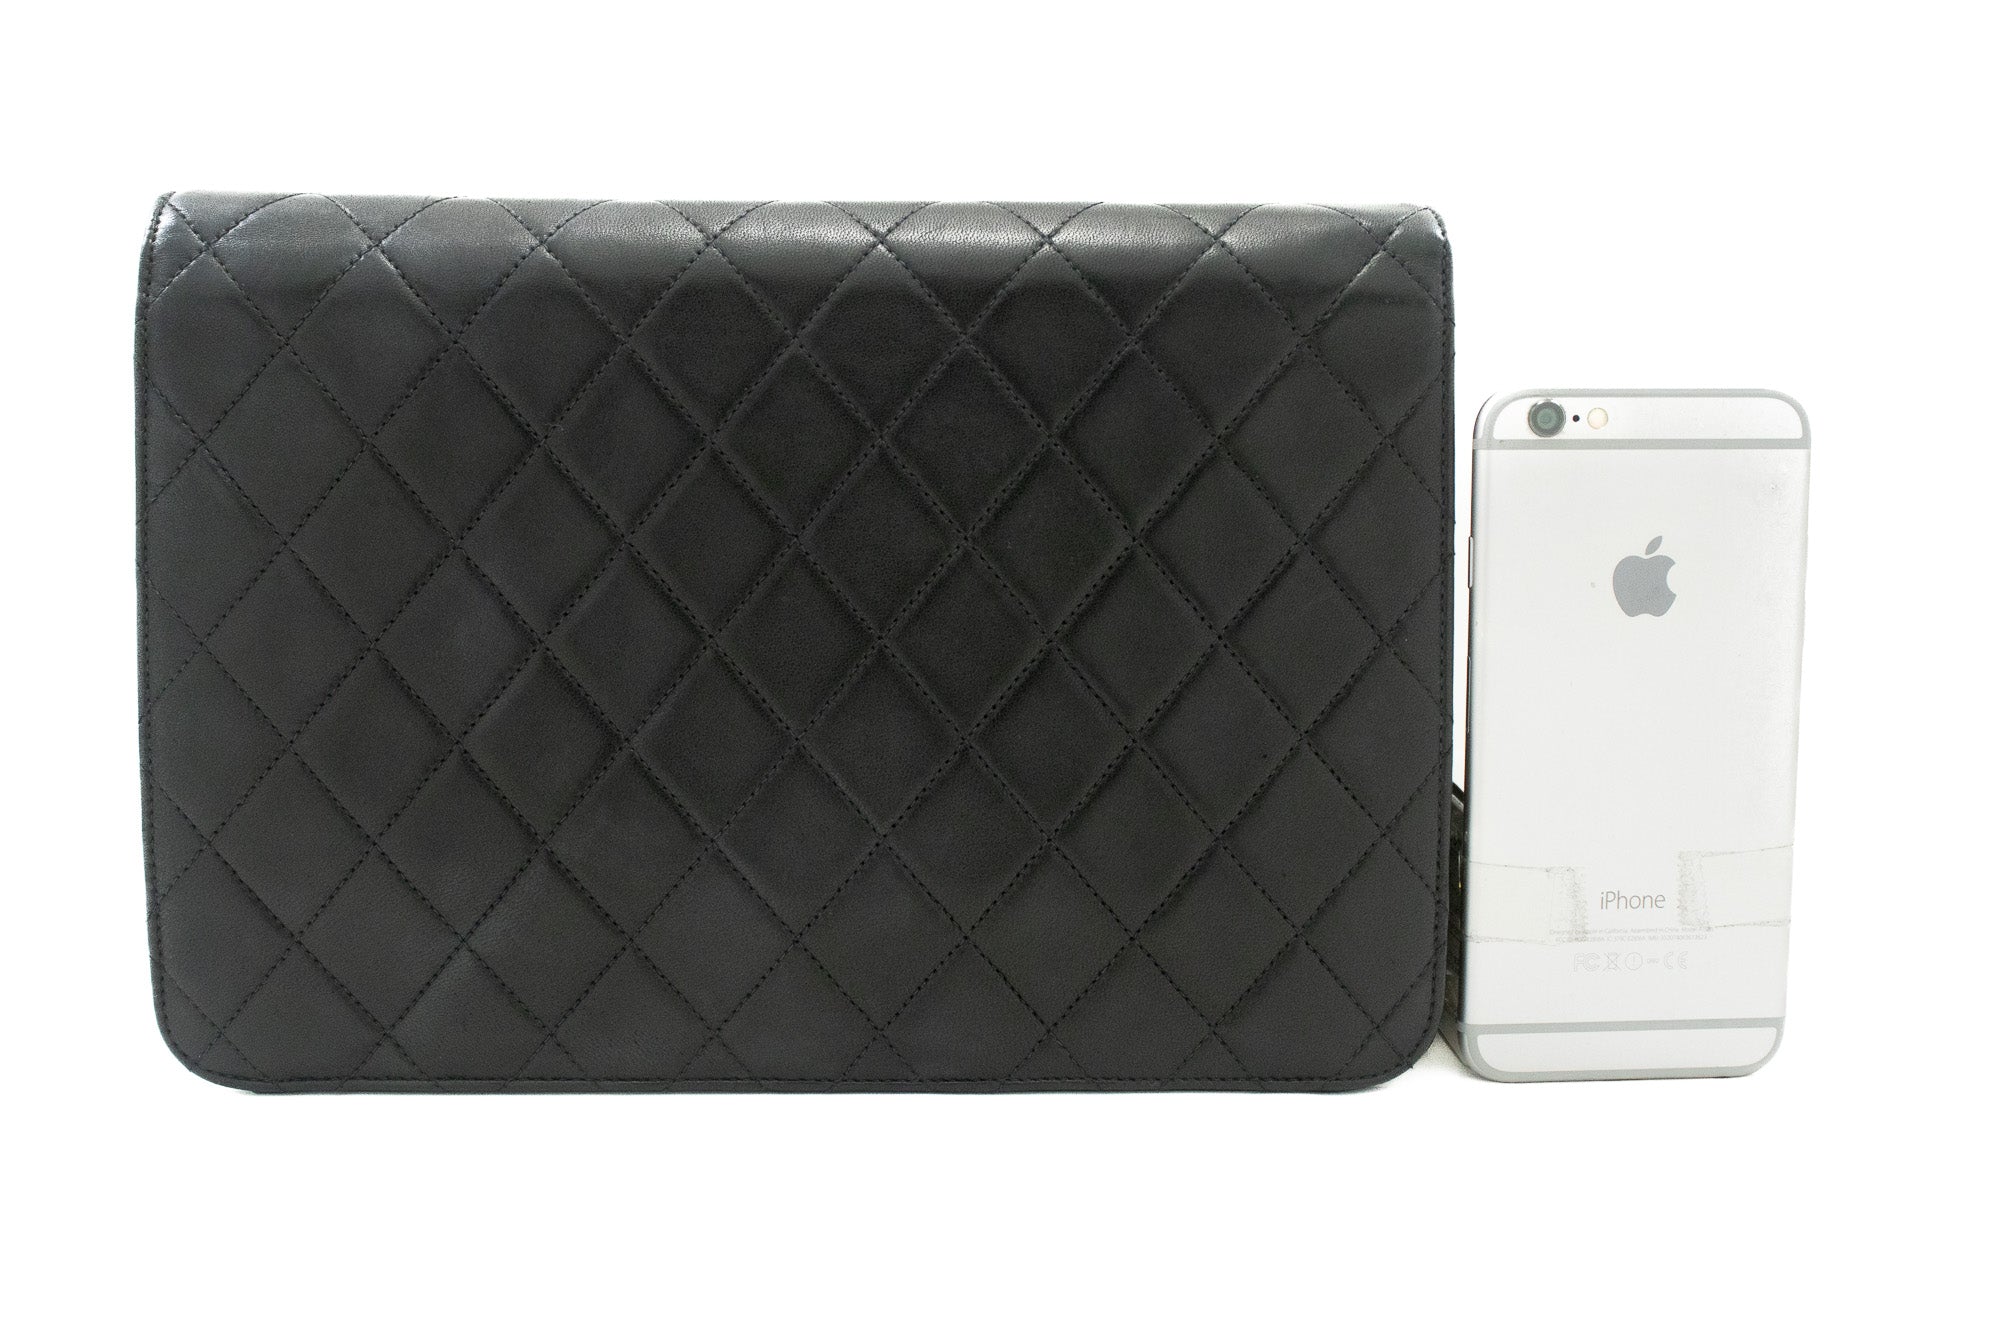 Quilted Phone Wallet Flap Black Purse Pouch Shoulder Bag Cellphone Case  Phone Bag Clutch